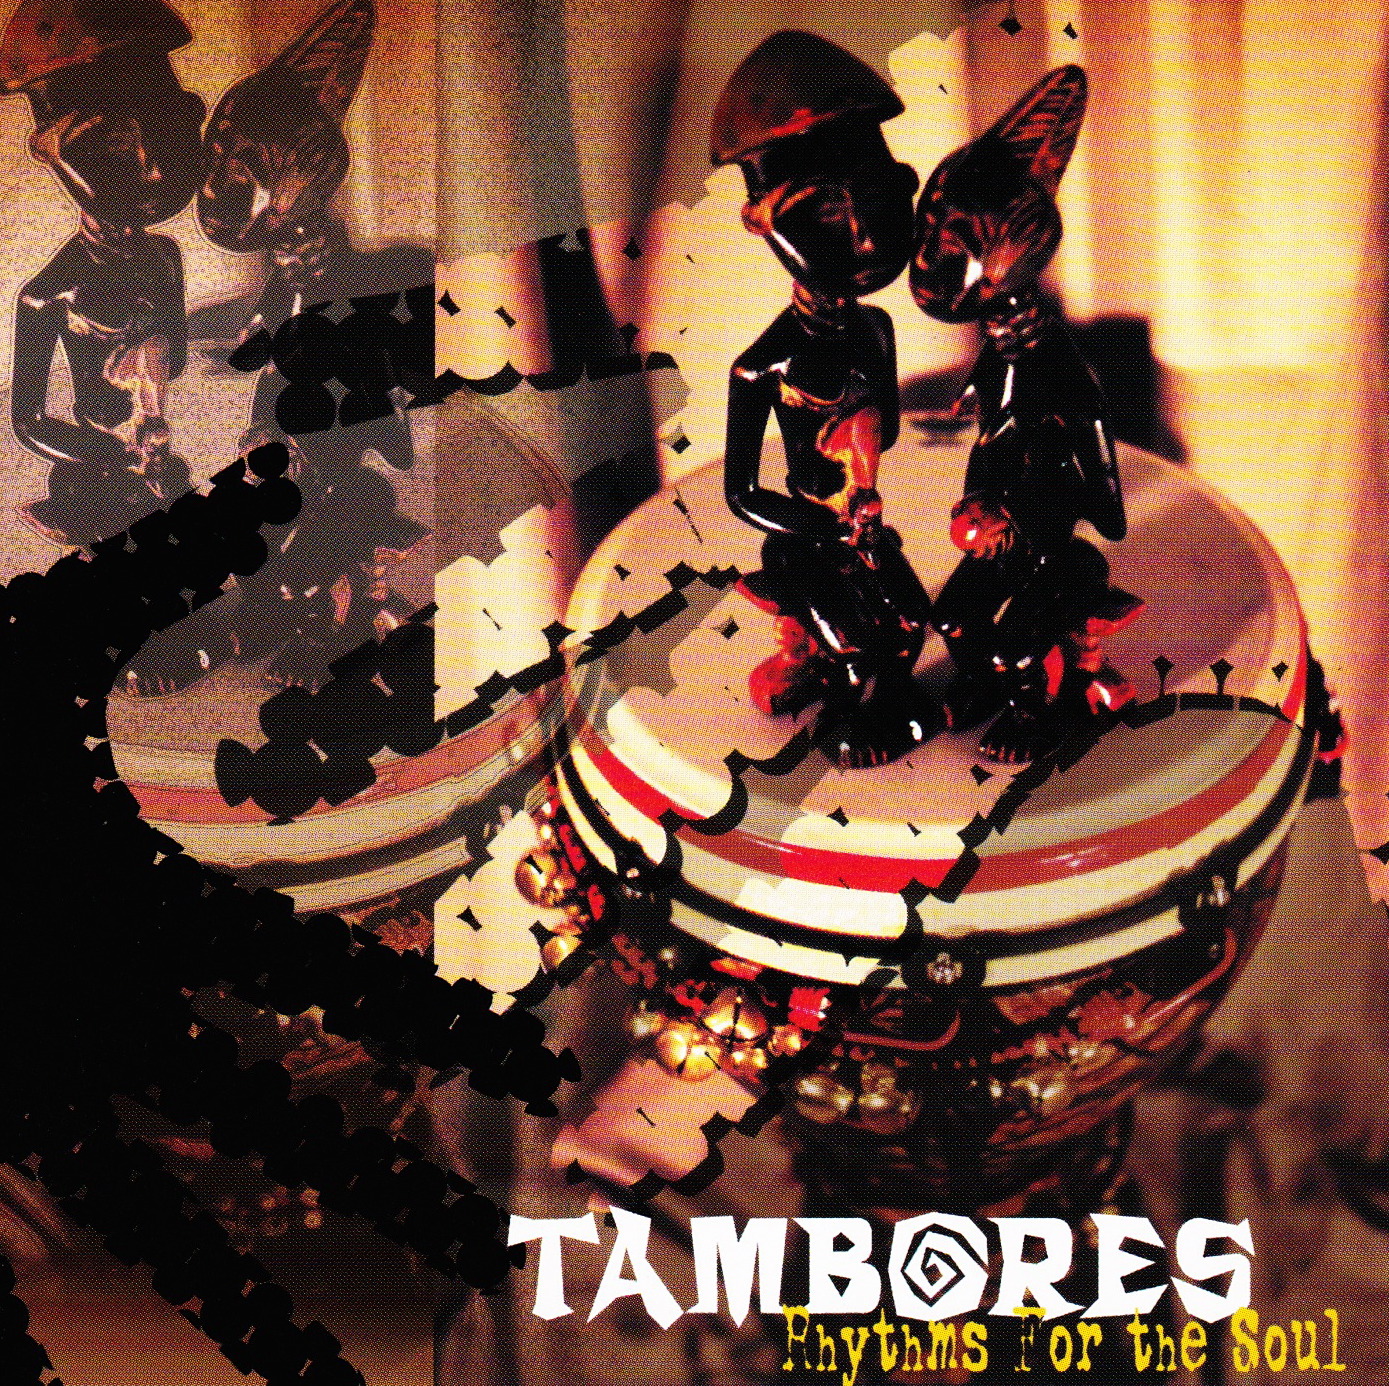 Tambores: Rhythms for the Soul